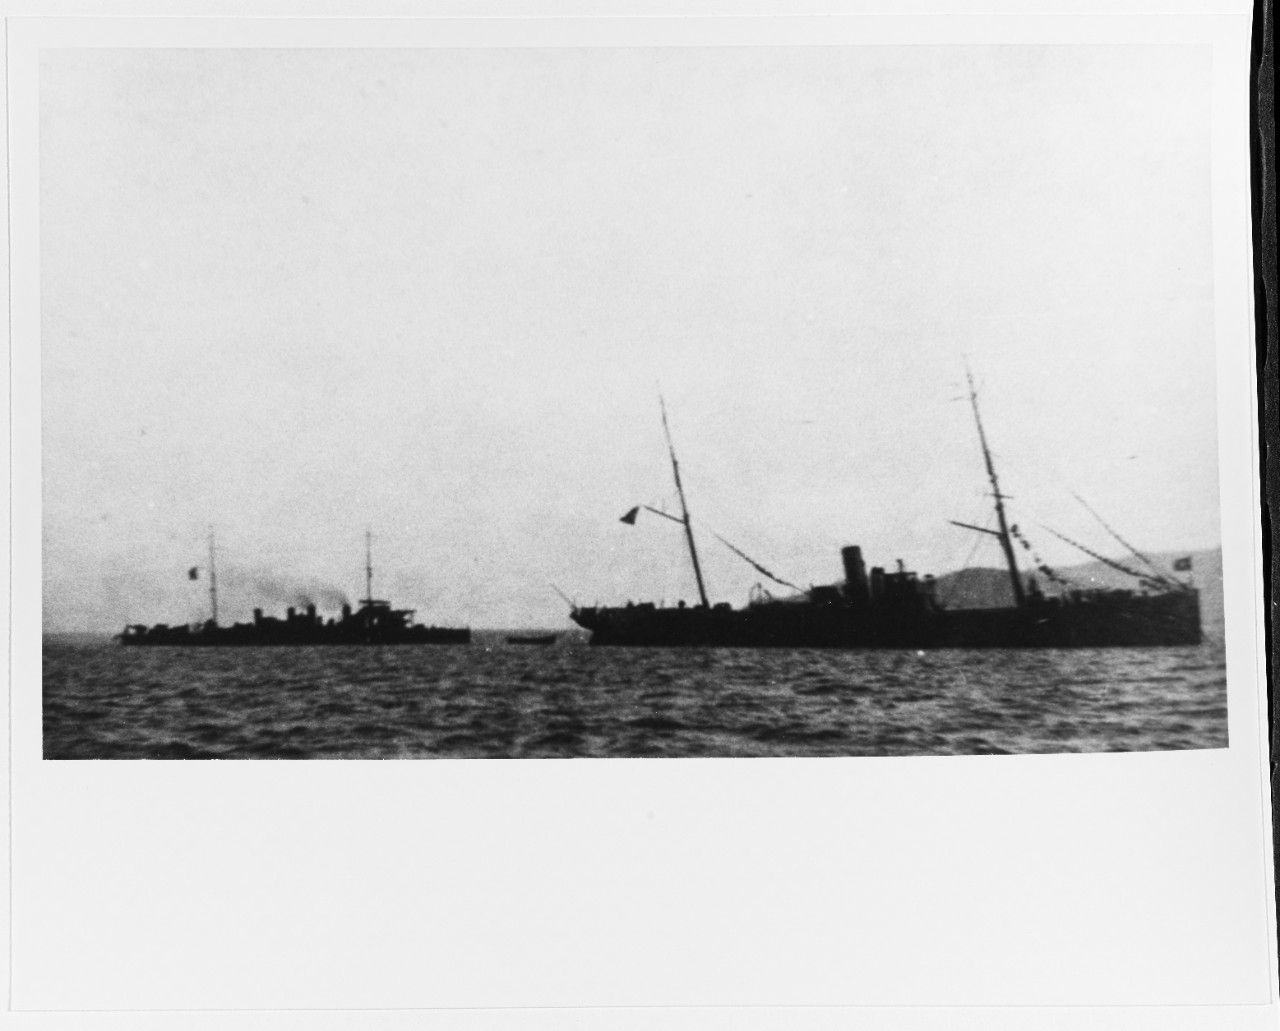 YAKUT (Russian Naval Transport, 1887-ca 1923)